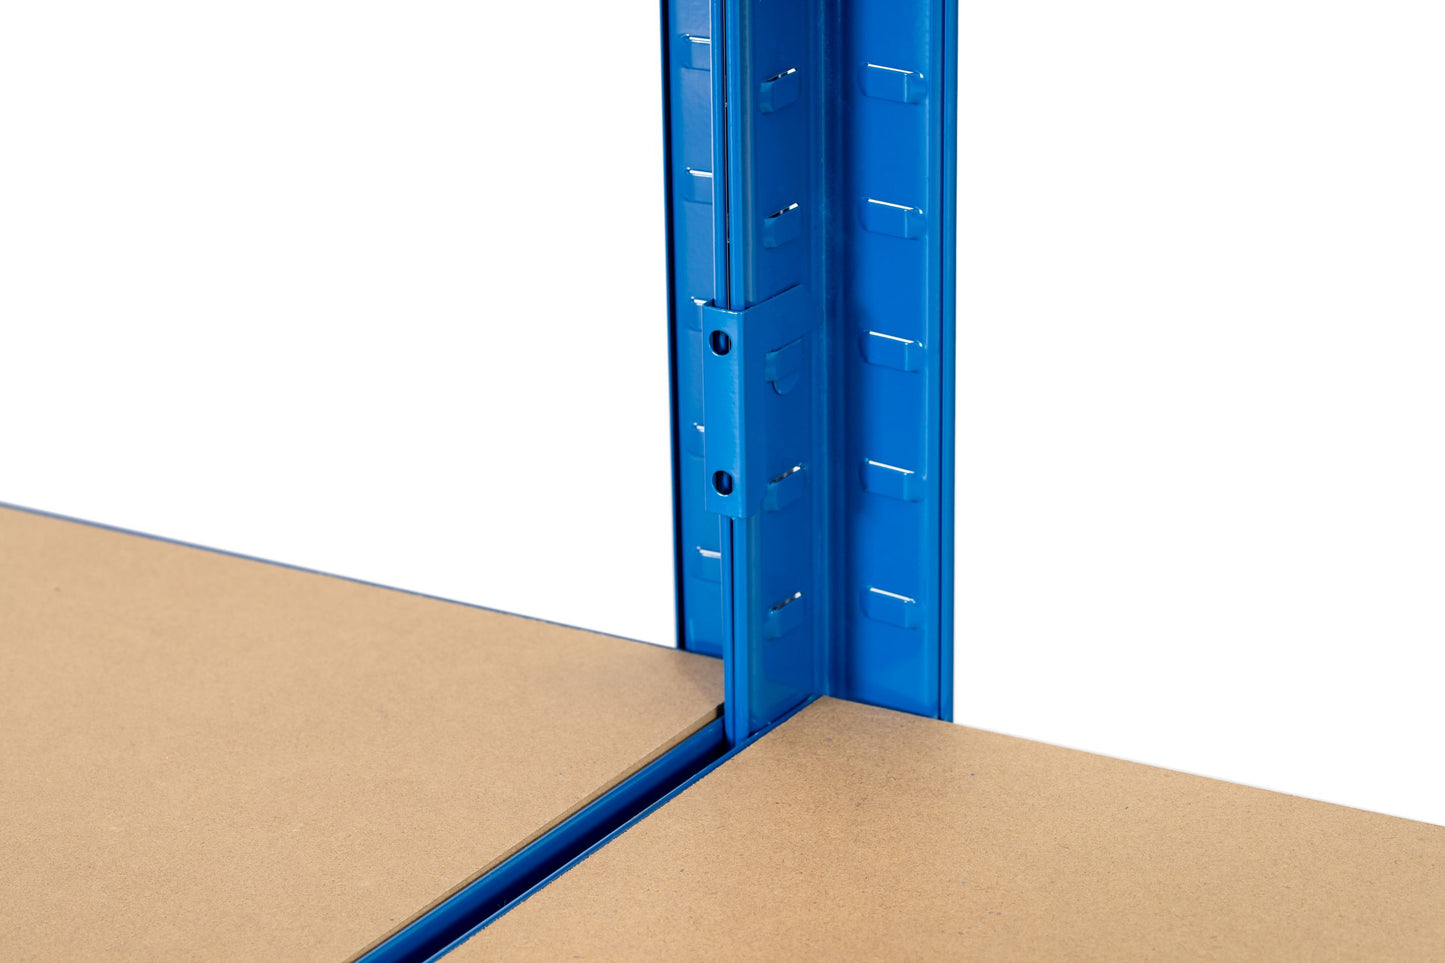 180 x 120 x 45cm | Blue | 5 Tier Boltless Heavy Duty Garage Shelving Unit | 1000kg Load Weight